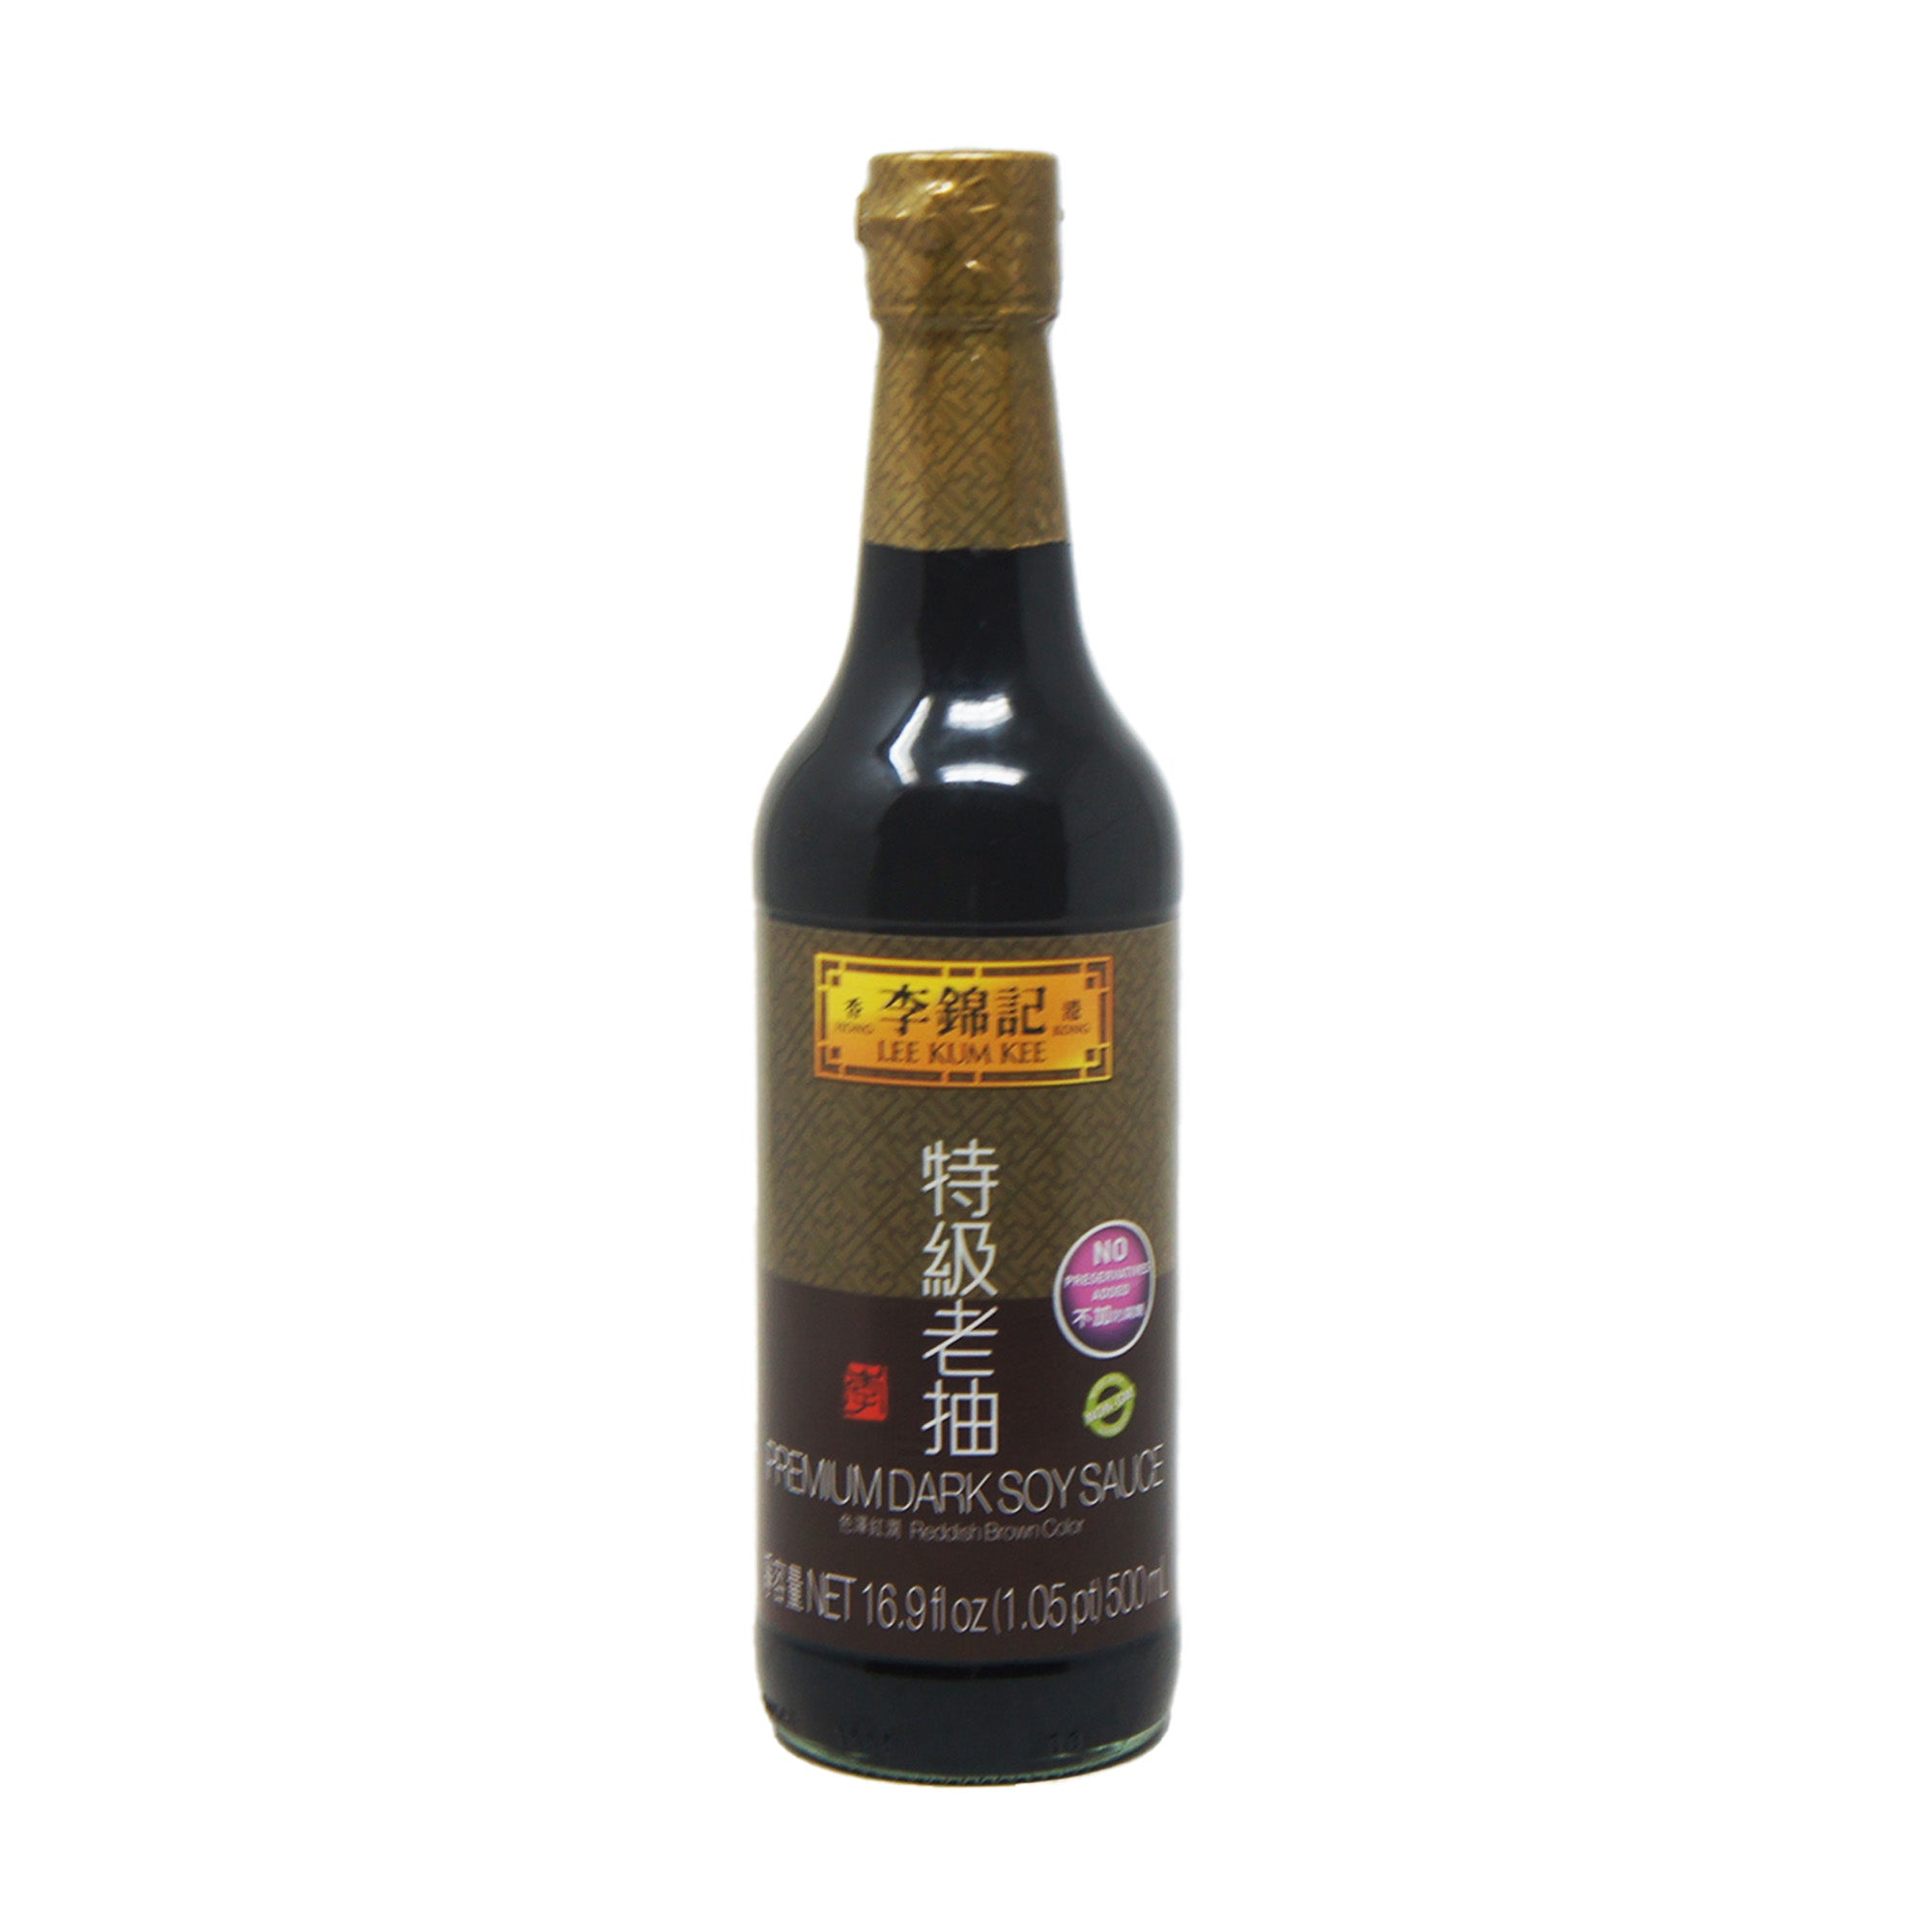 Lee Kum Kee Premium Dark Soy Sauce, 16.9 fl oz Bottle, Product of China